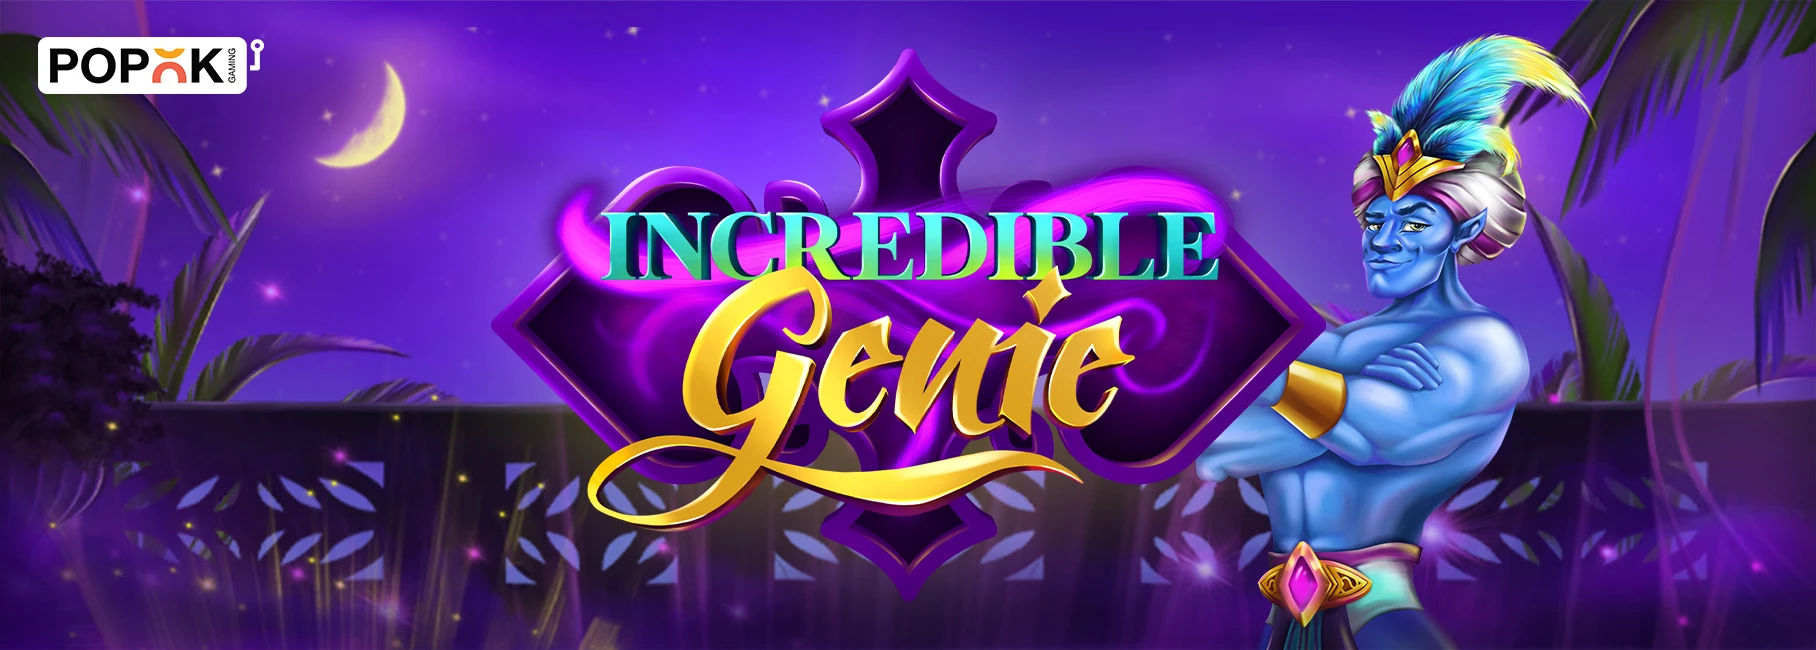 203-incredible-genie-web-1675859405107.jpg